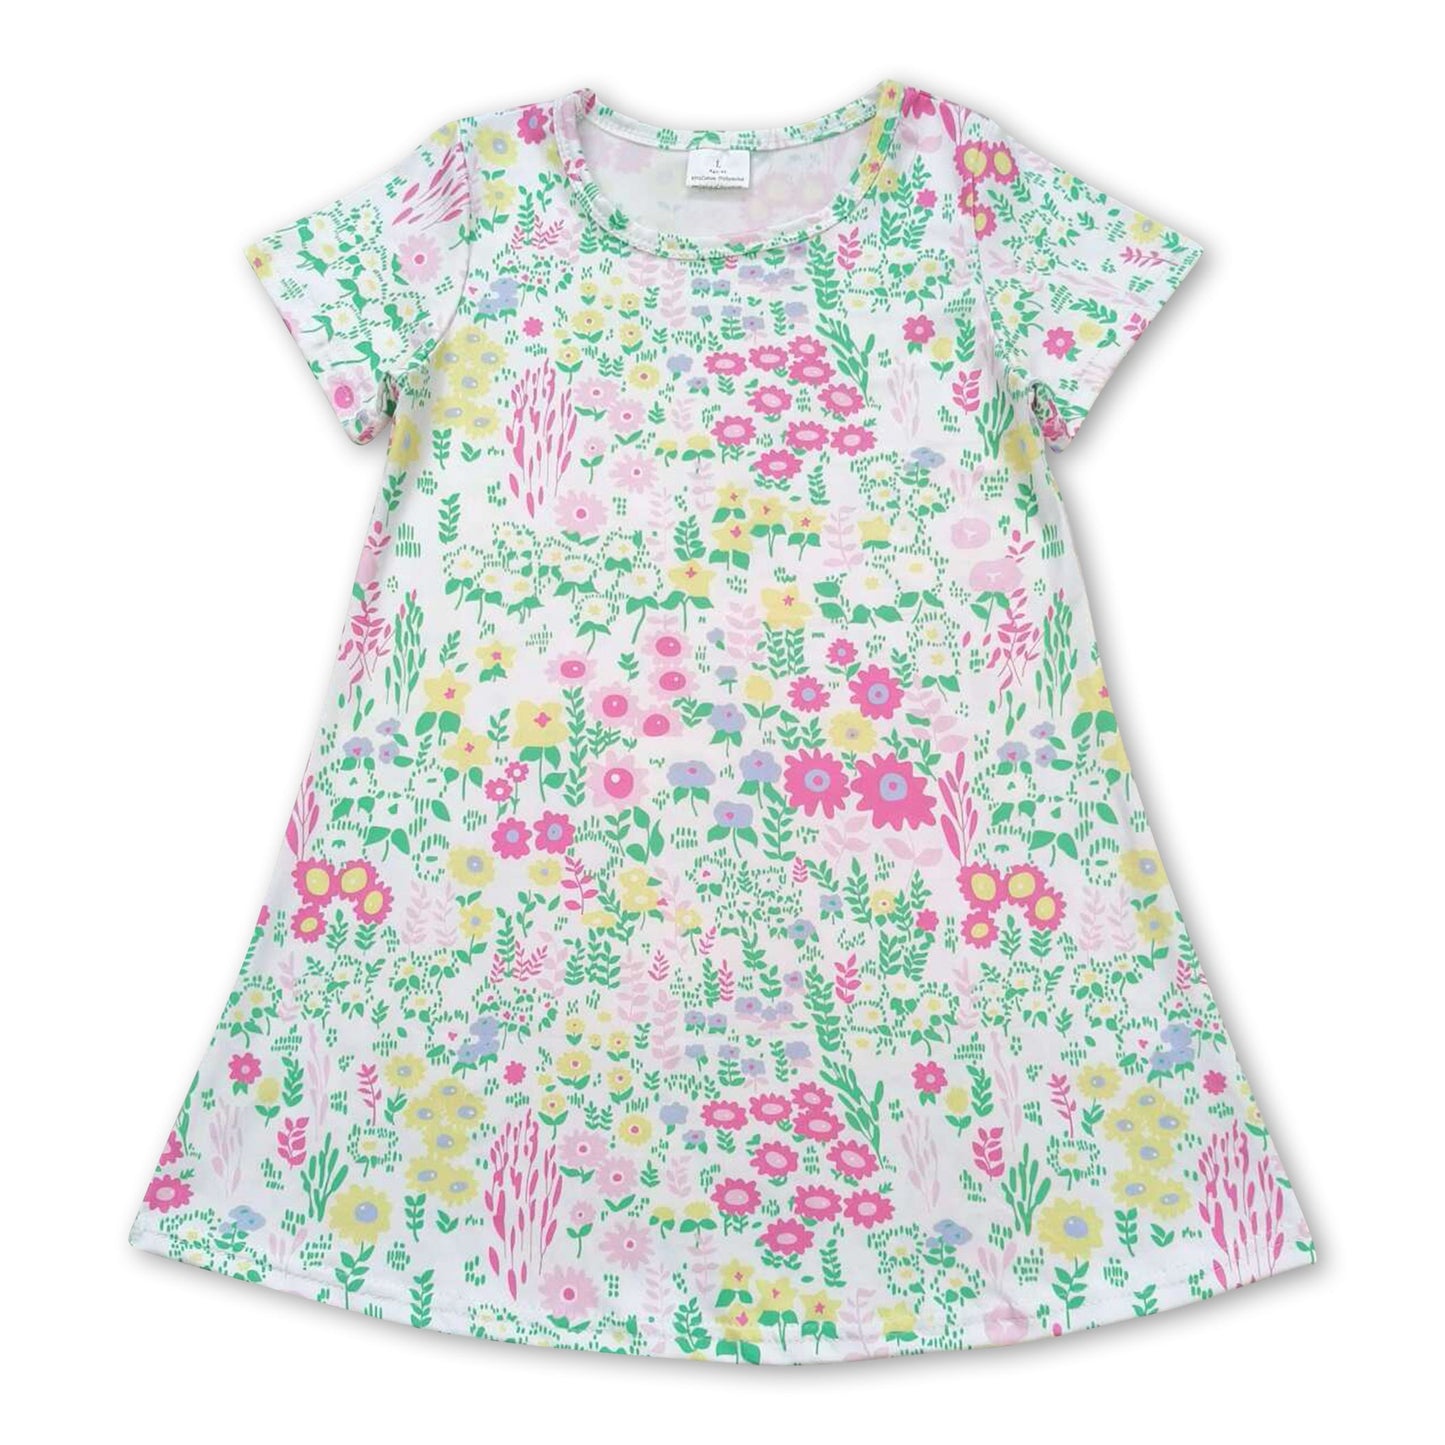 Short sleeves floral baby girls summer dresses